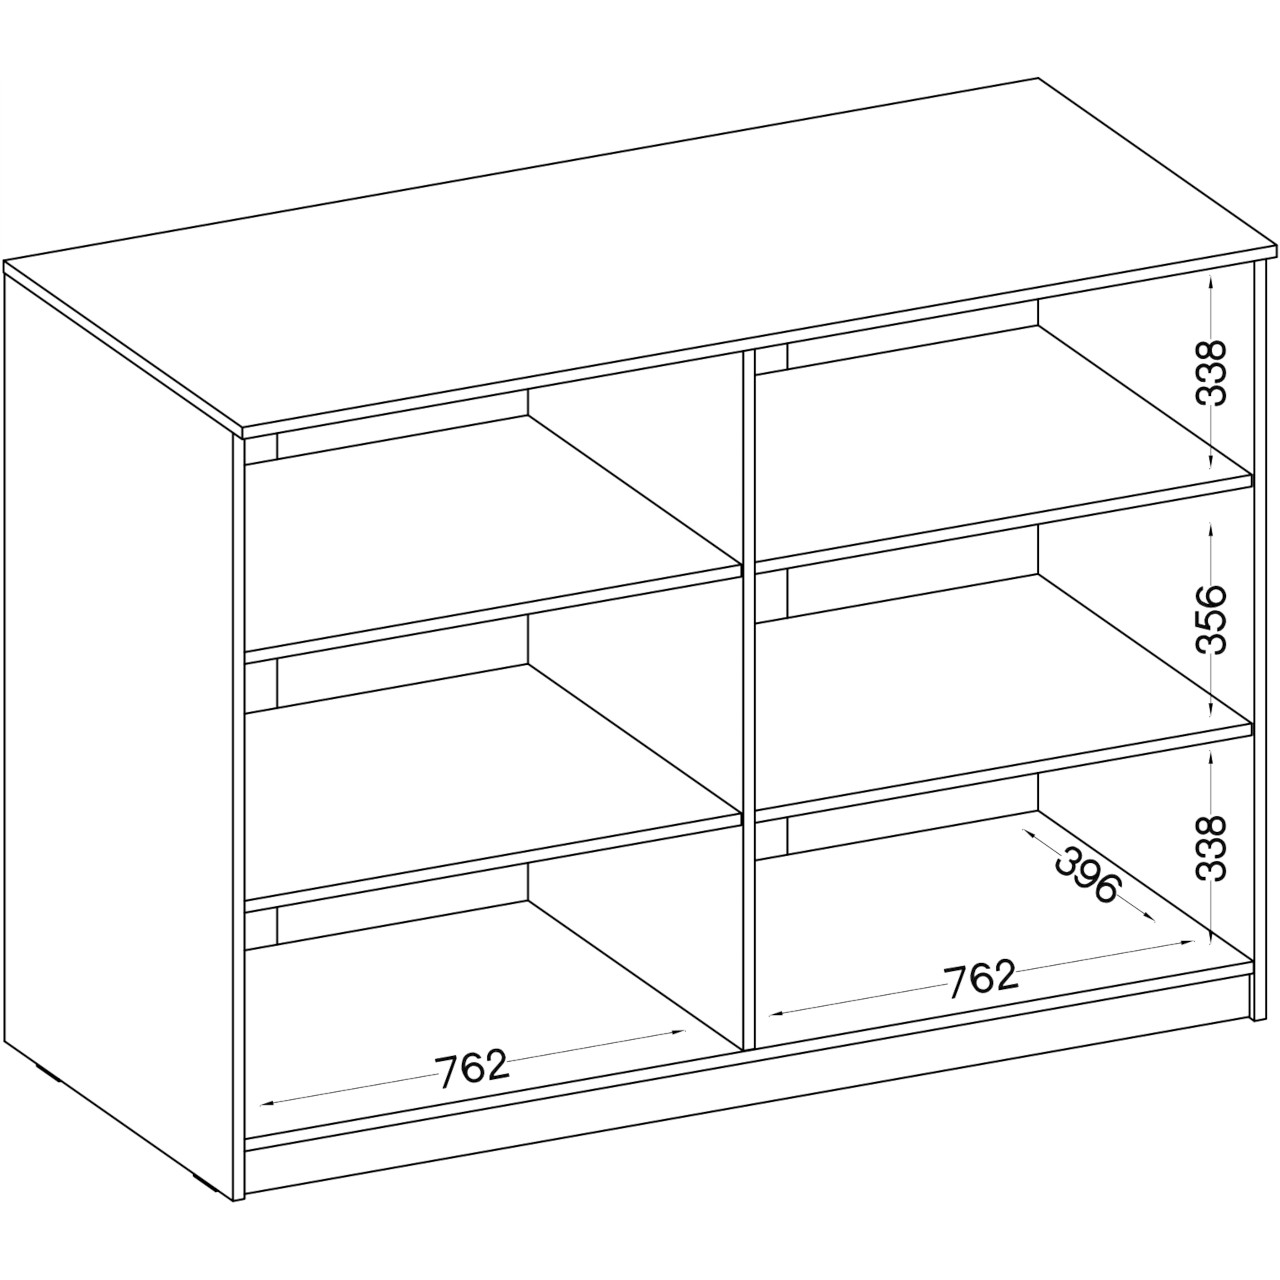 Storage Cabinet MALTA MT23 light grey / artisan oak